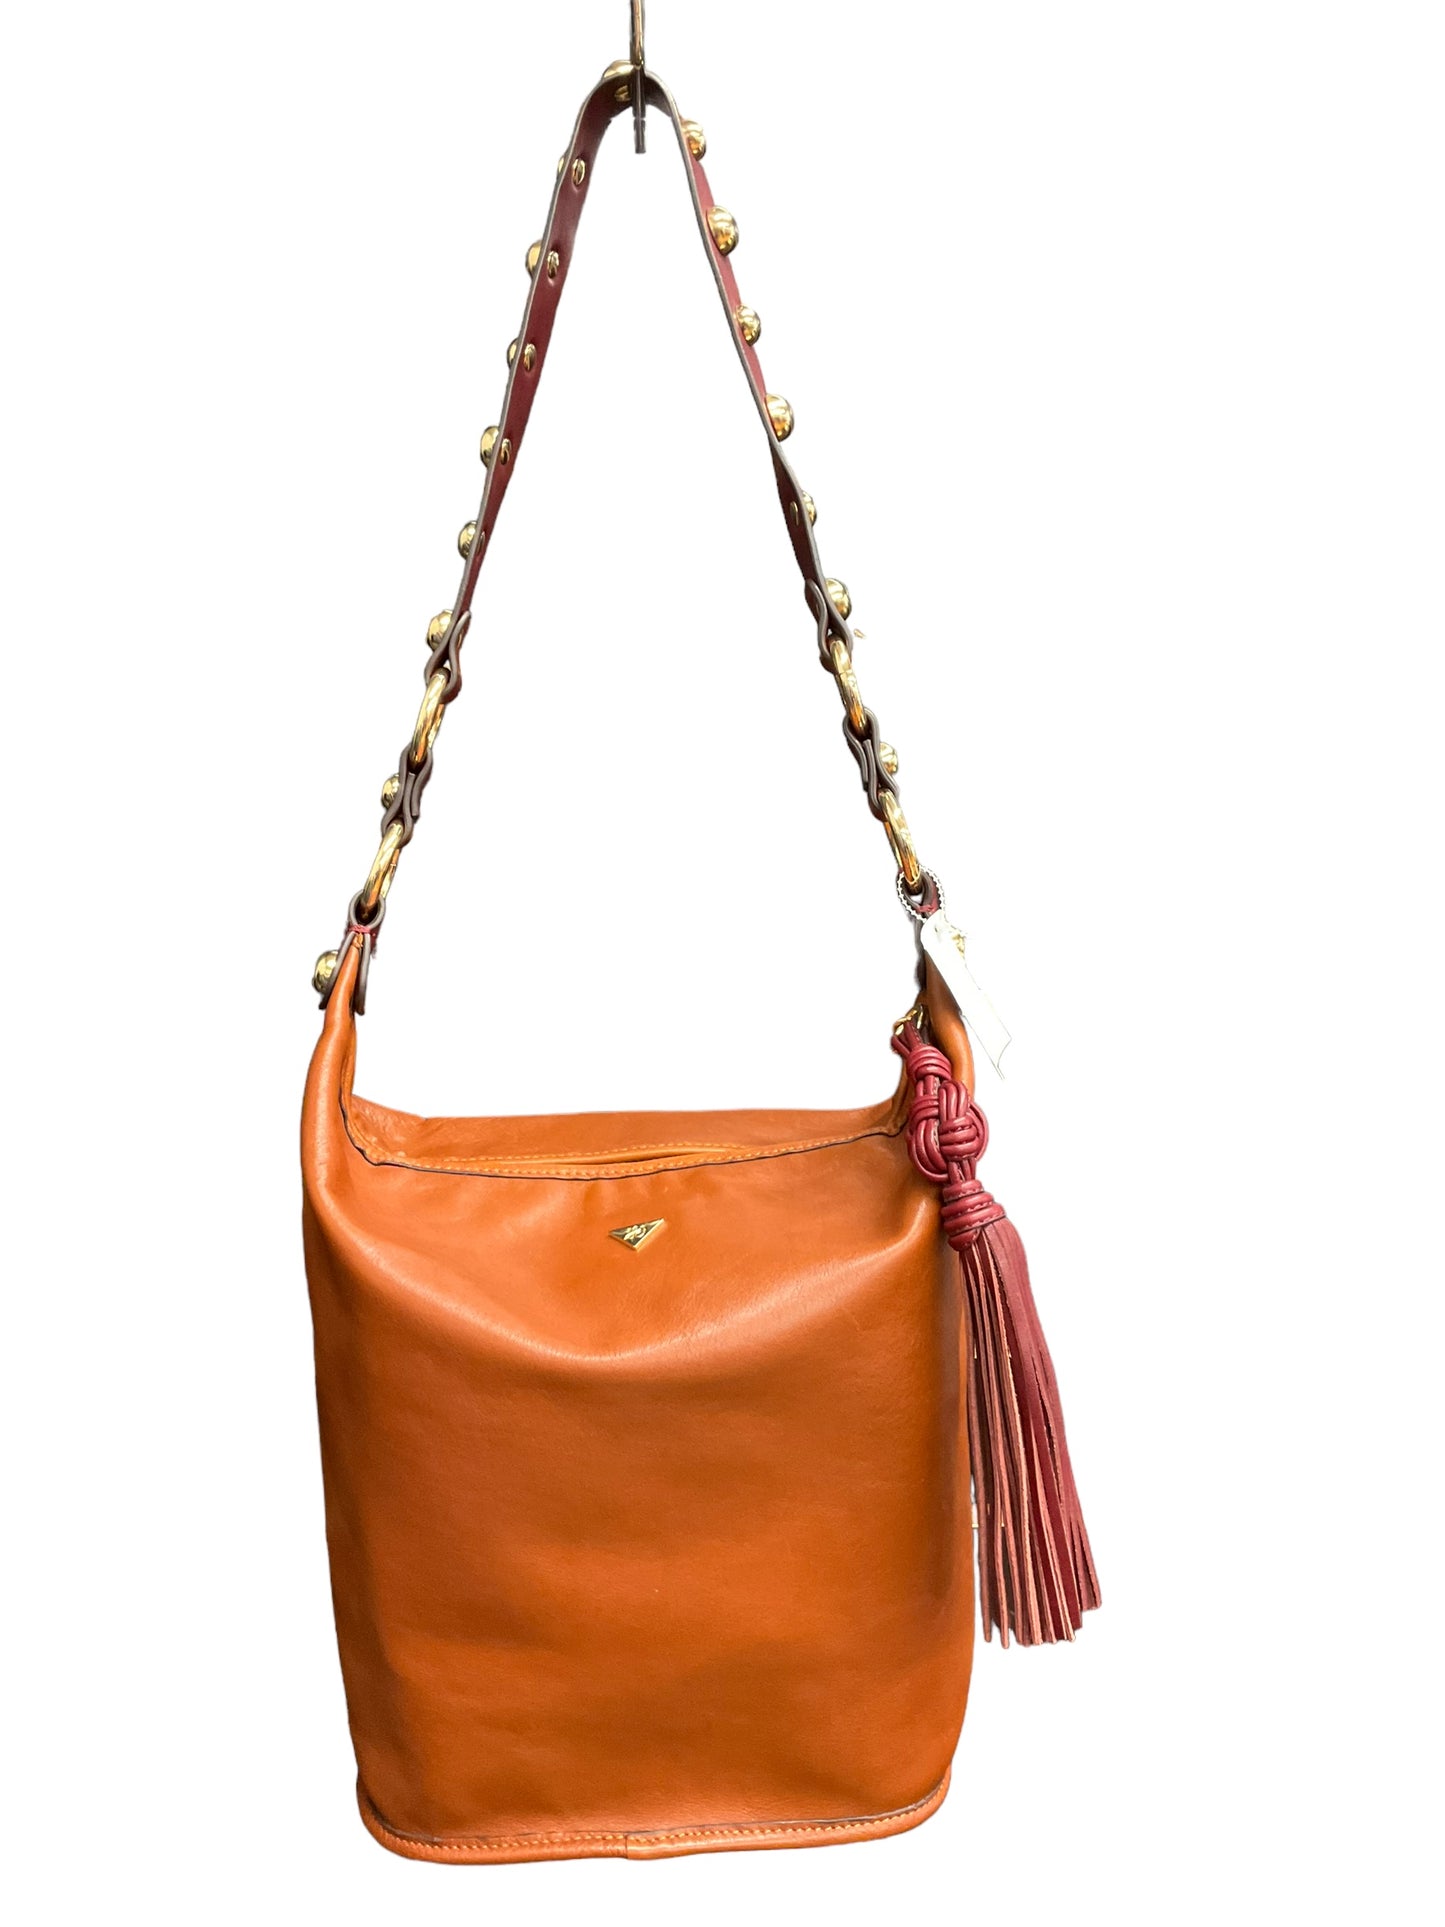 Handbag Leather By Sam Edelman  Size: Medium